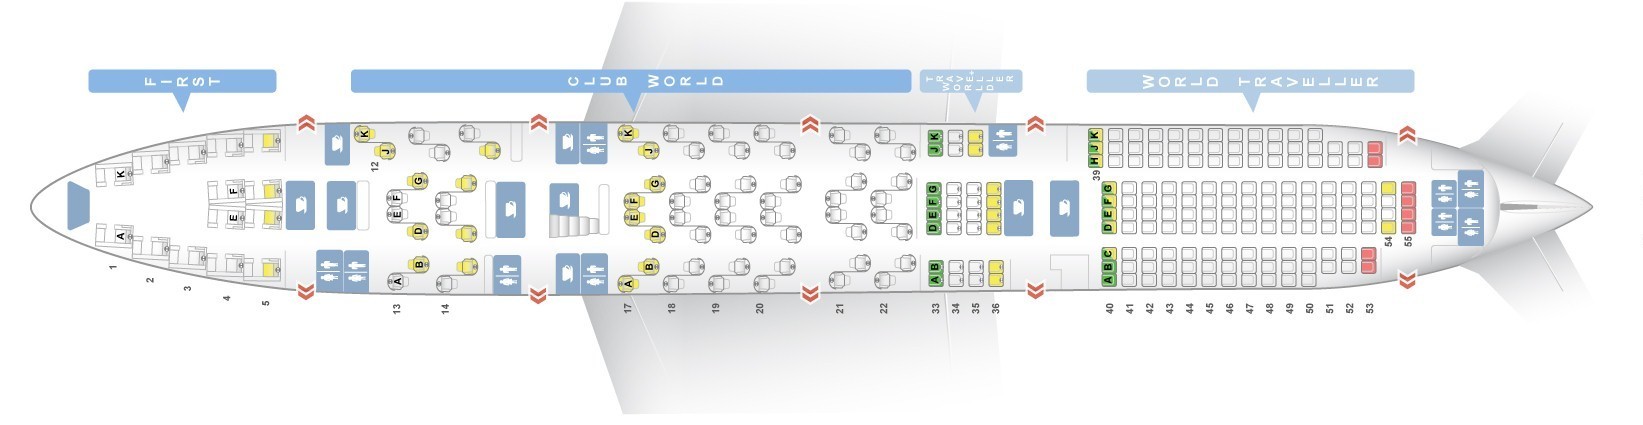 British Airways Boeing 744 Seating Chart